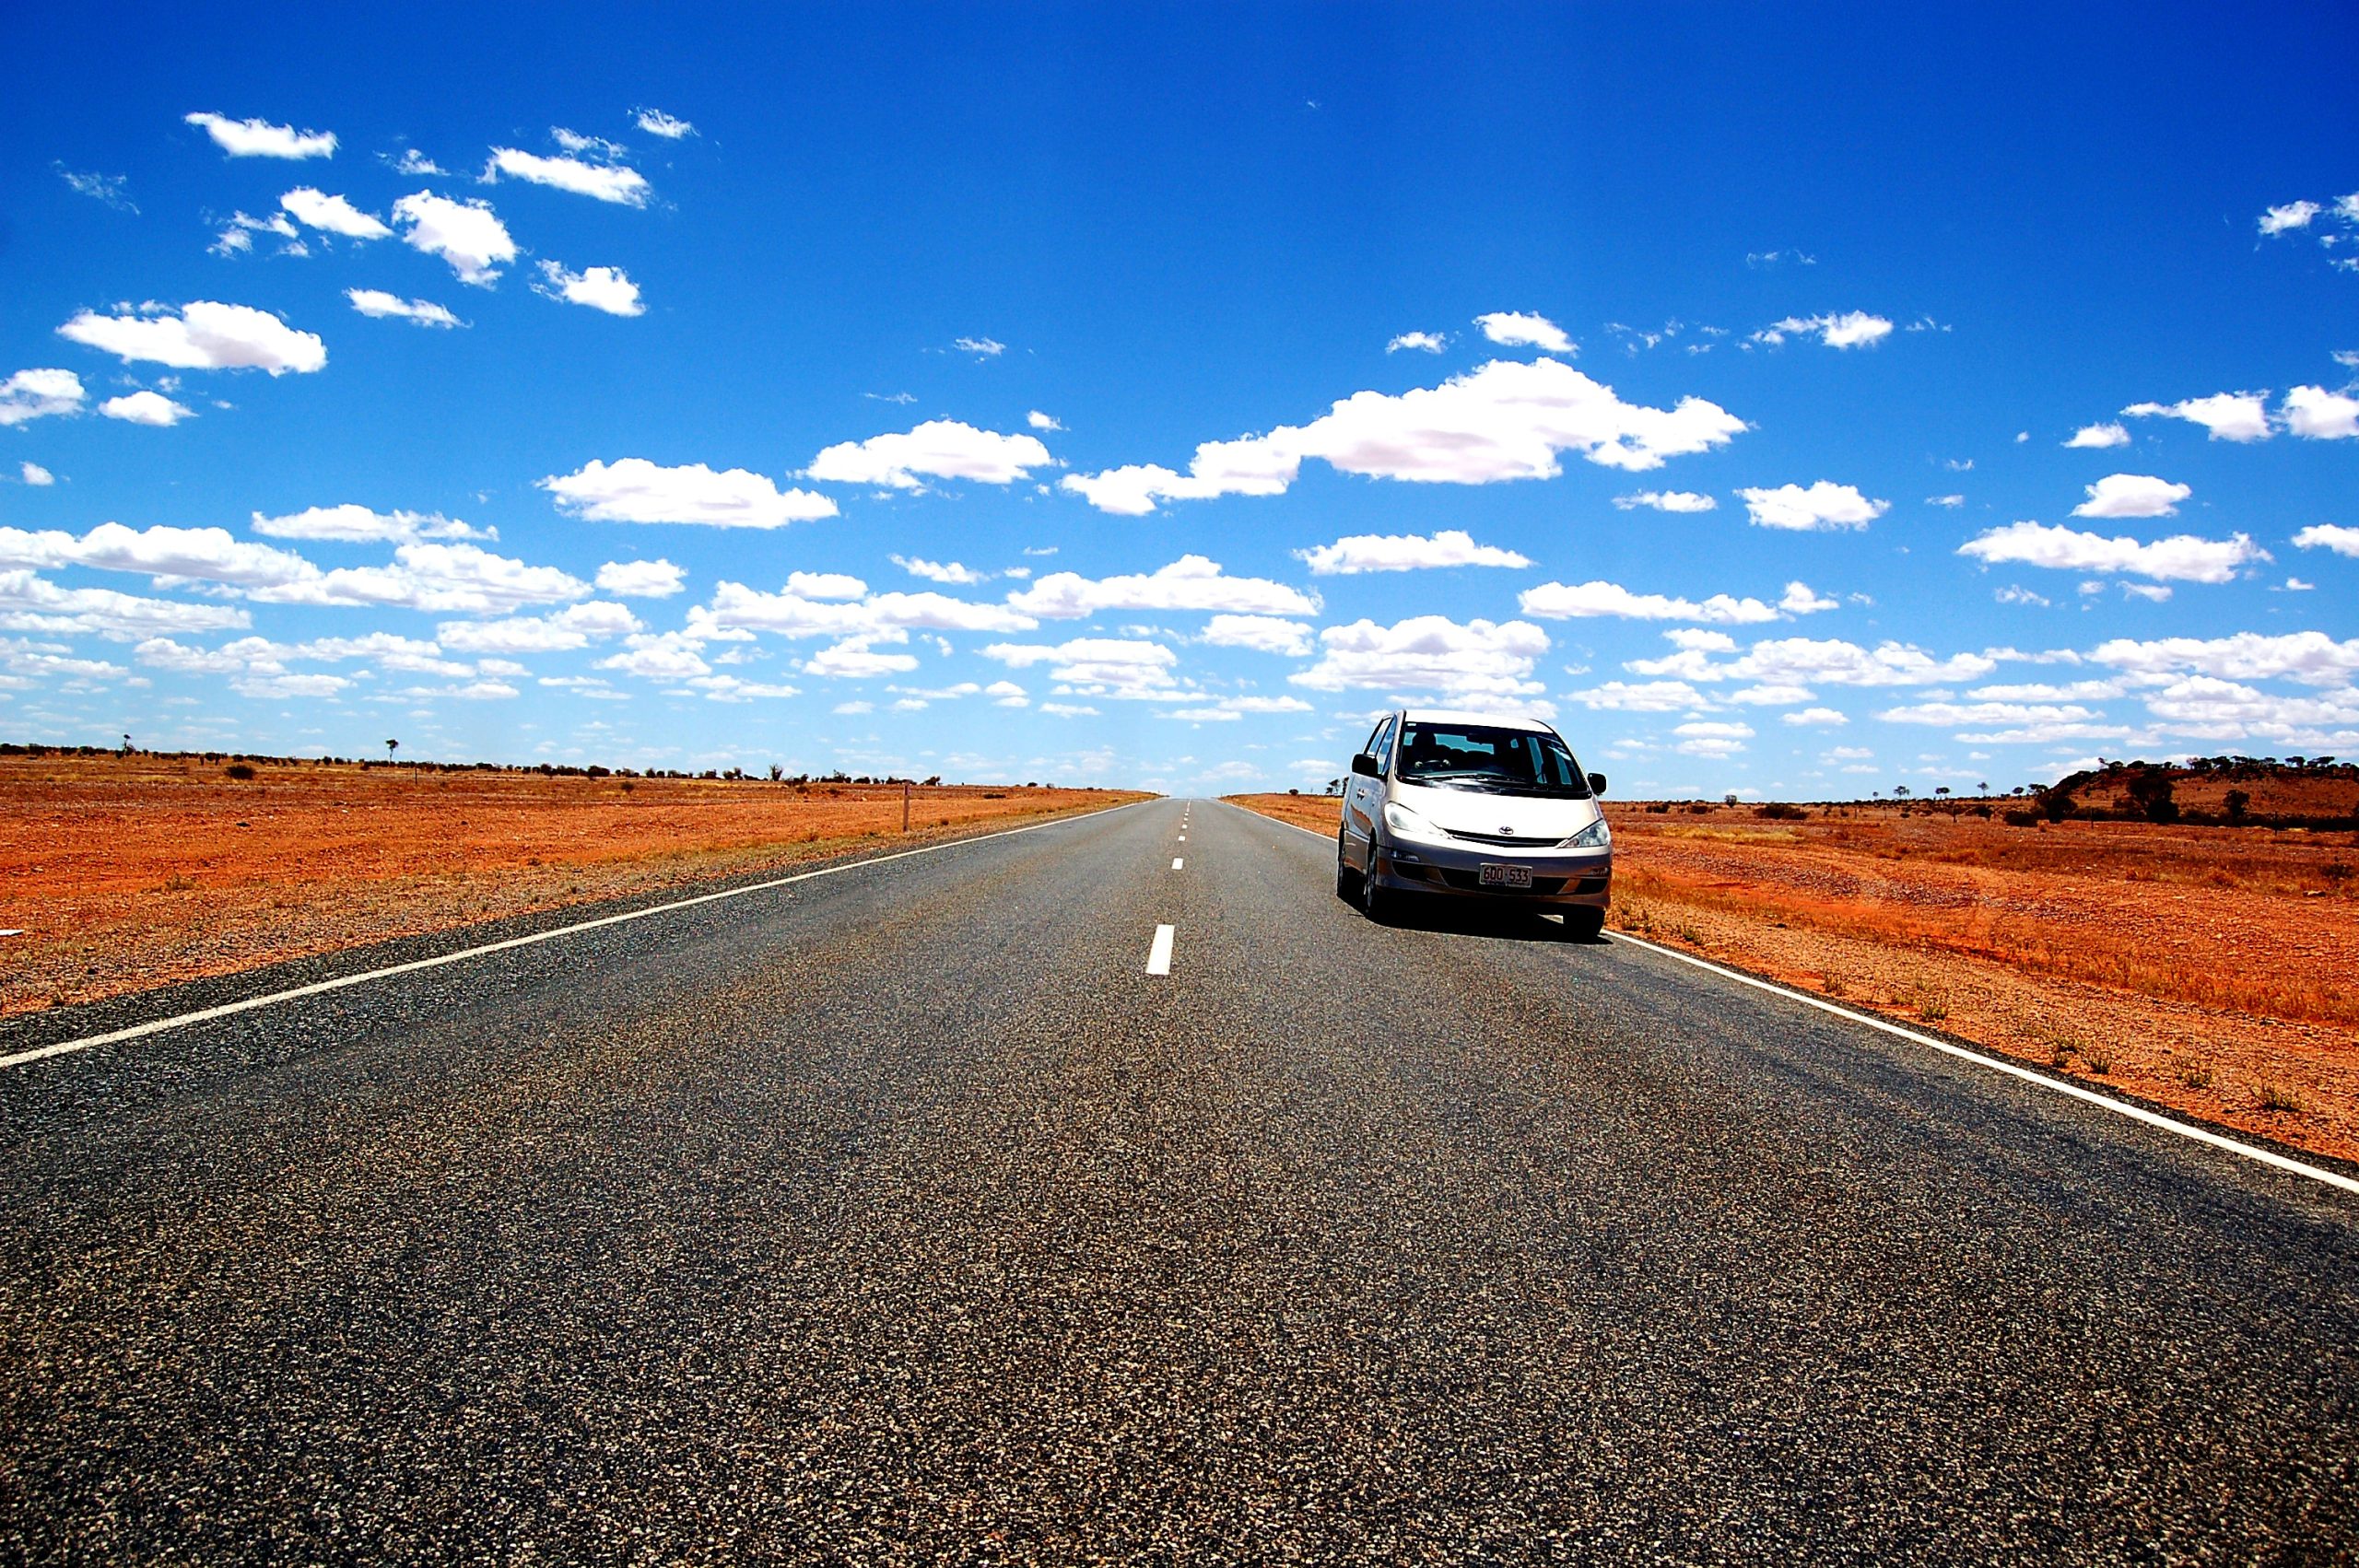 outback_australia_bush_road-scaled